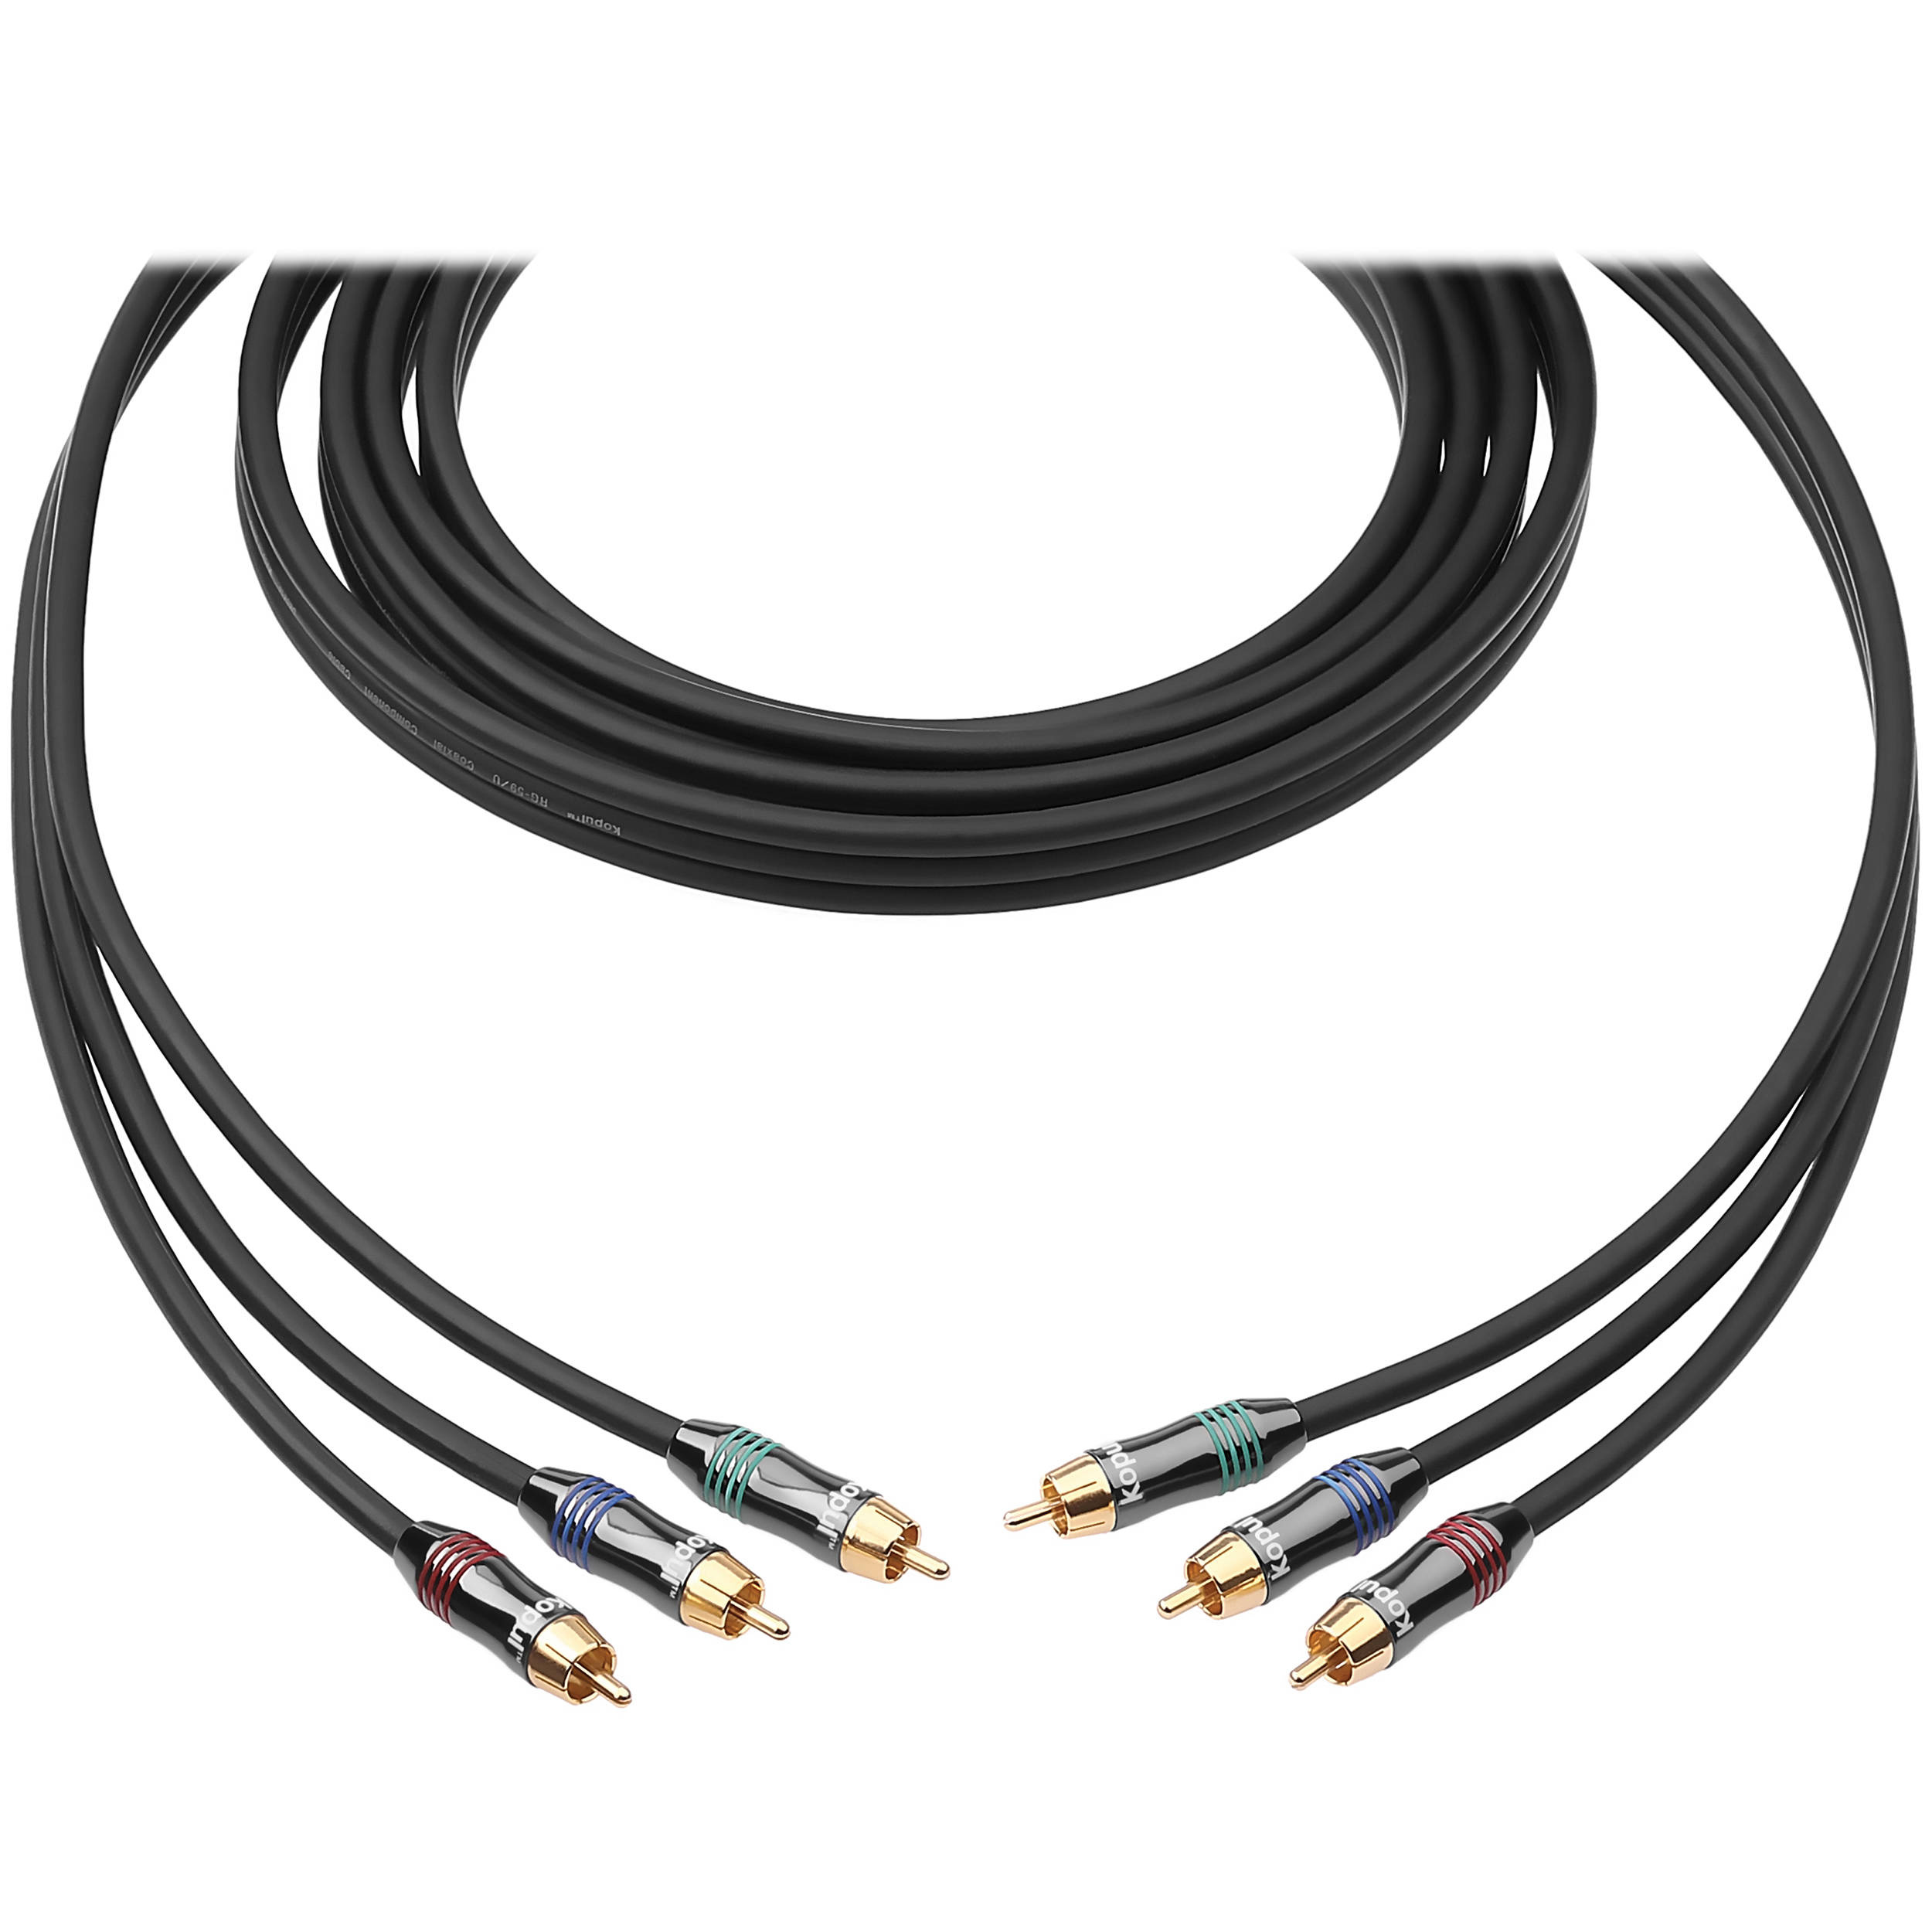 Kopul 15' Premium Series RCA Component Video Cable